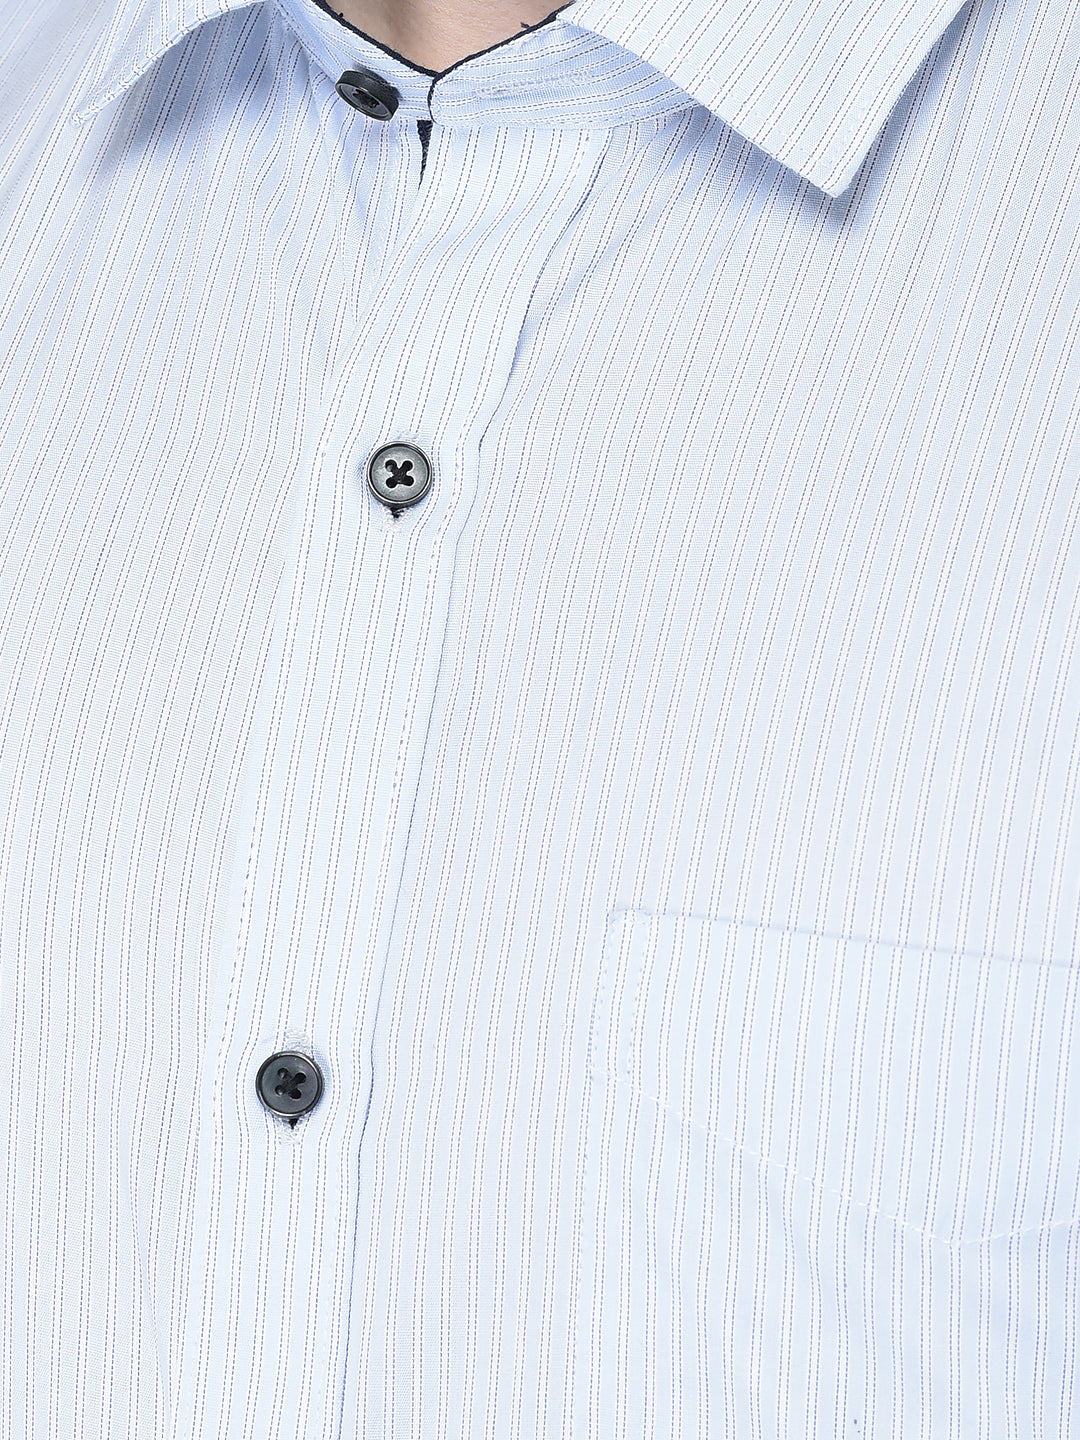 CANOE MEN Formal Shirt Blue Color Cotton Fabric Button Closure Striped